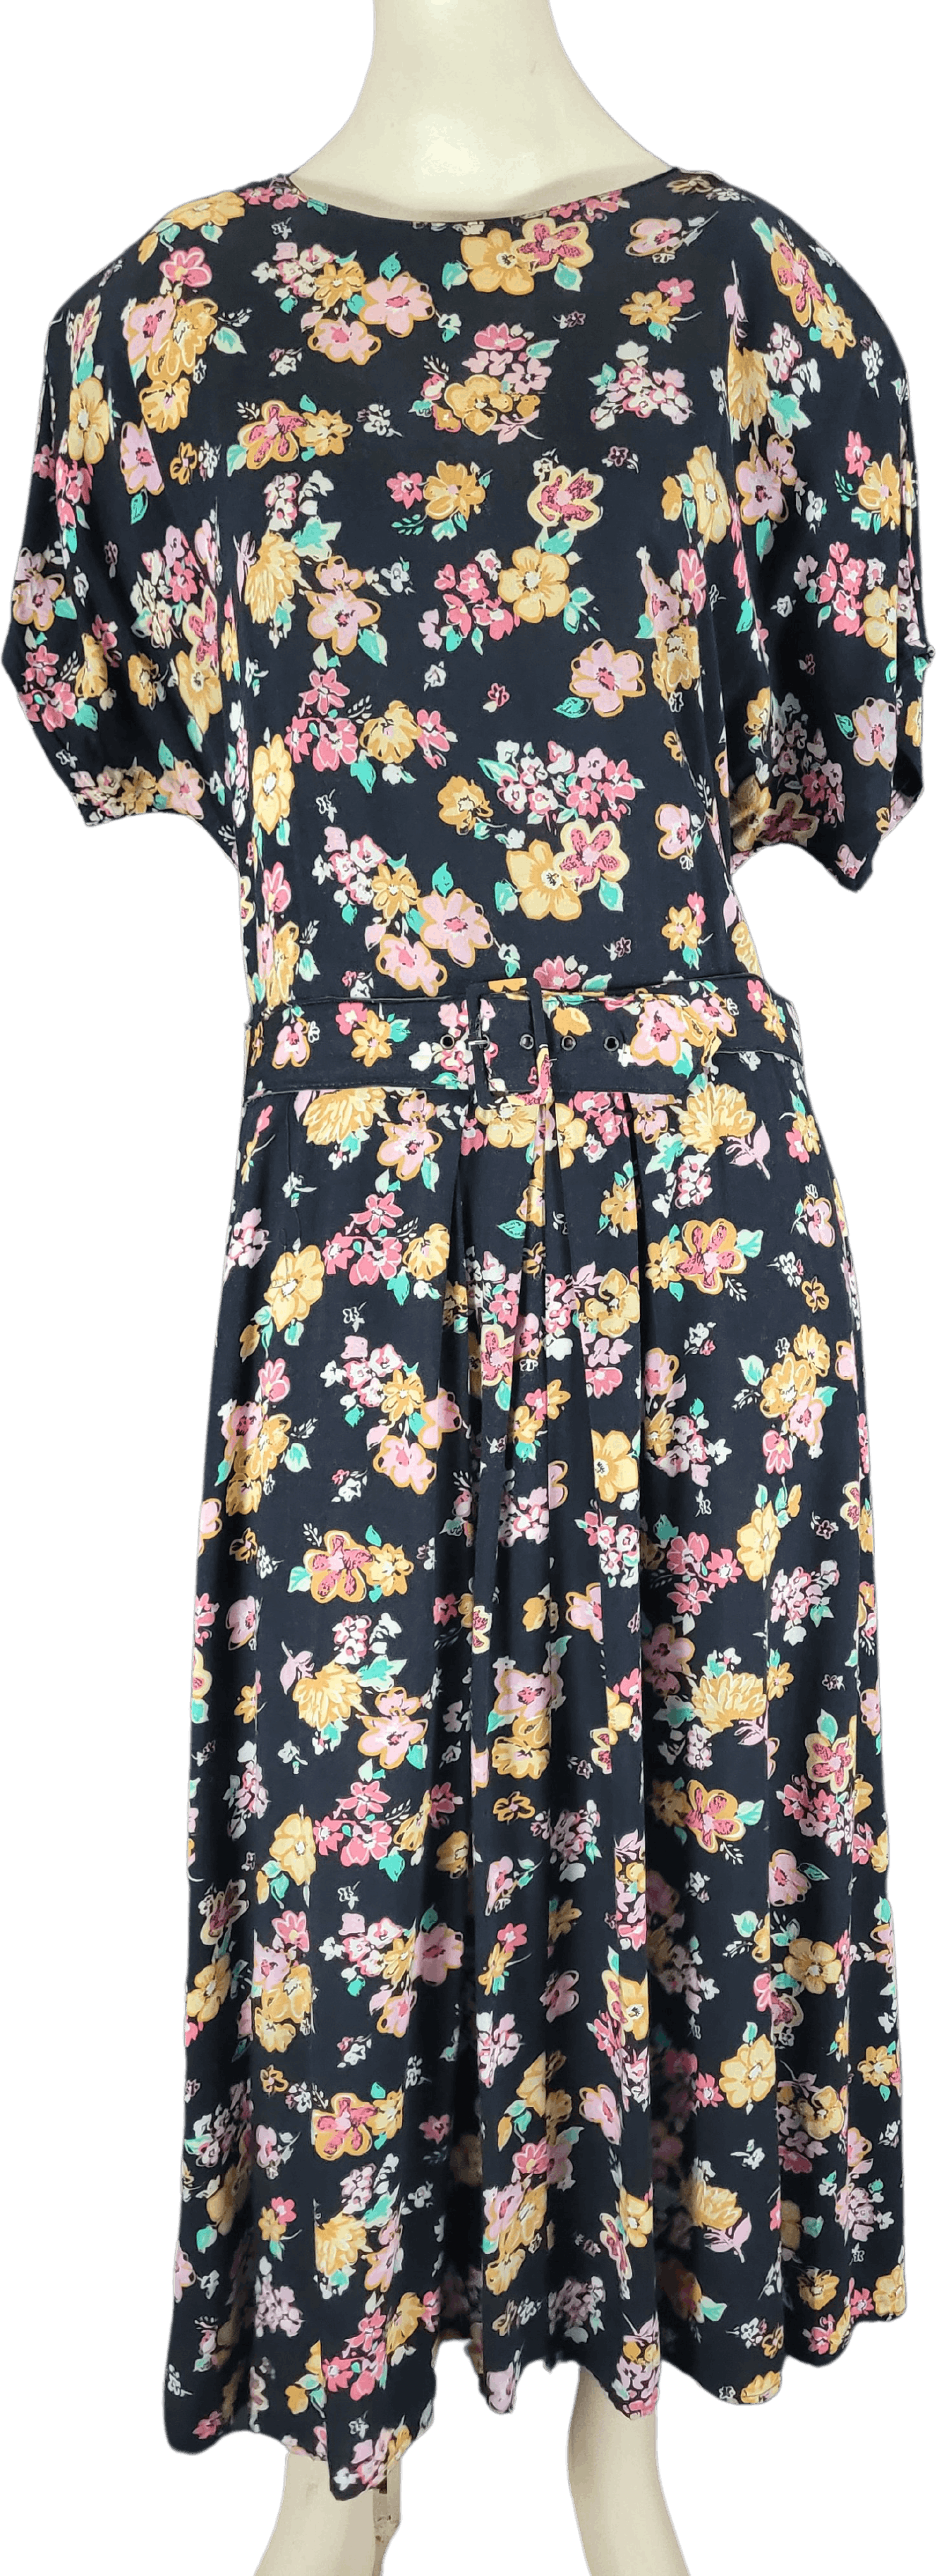 Vintage 80's Black Garden Floral Belted Dress by Paquette Too! | Shop ...